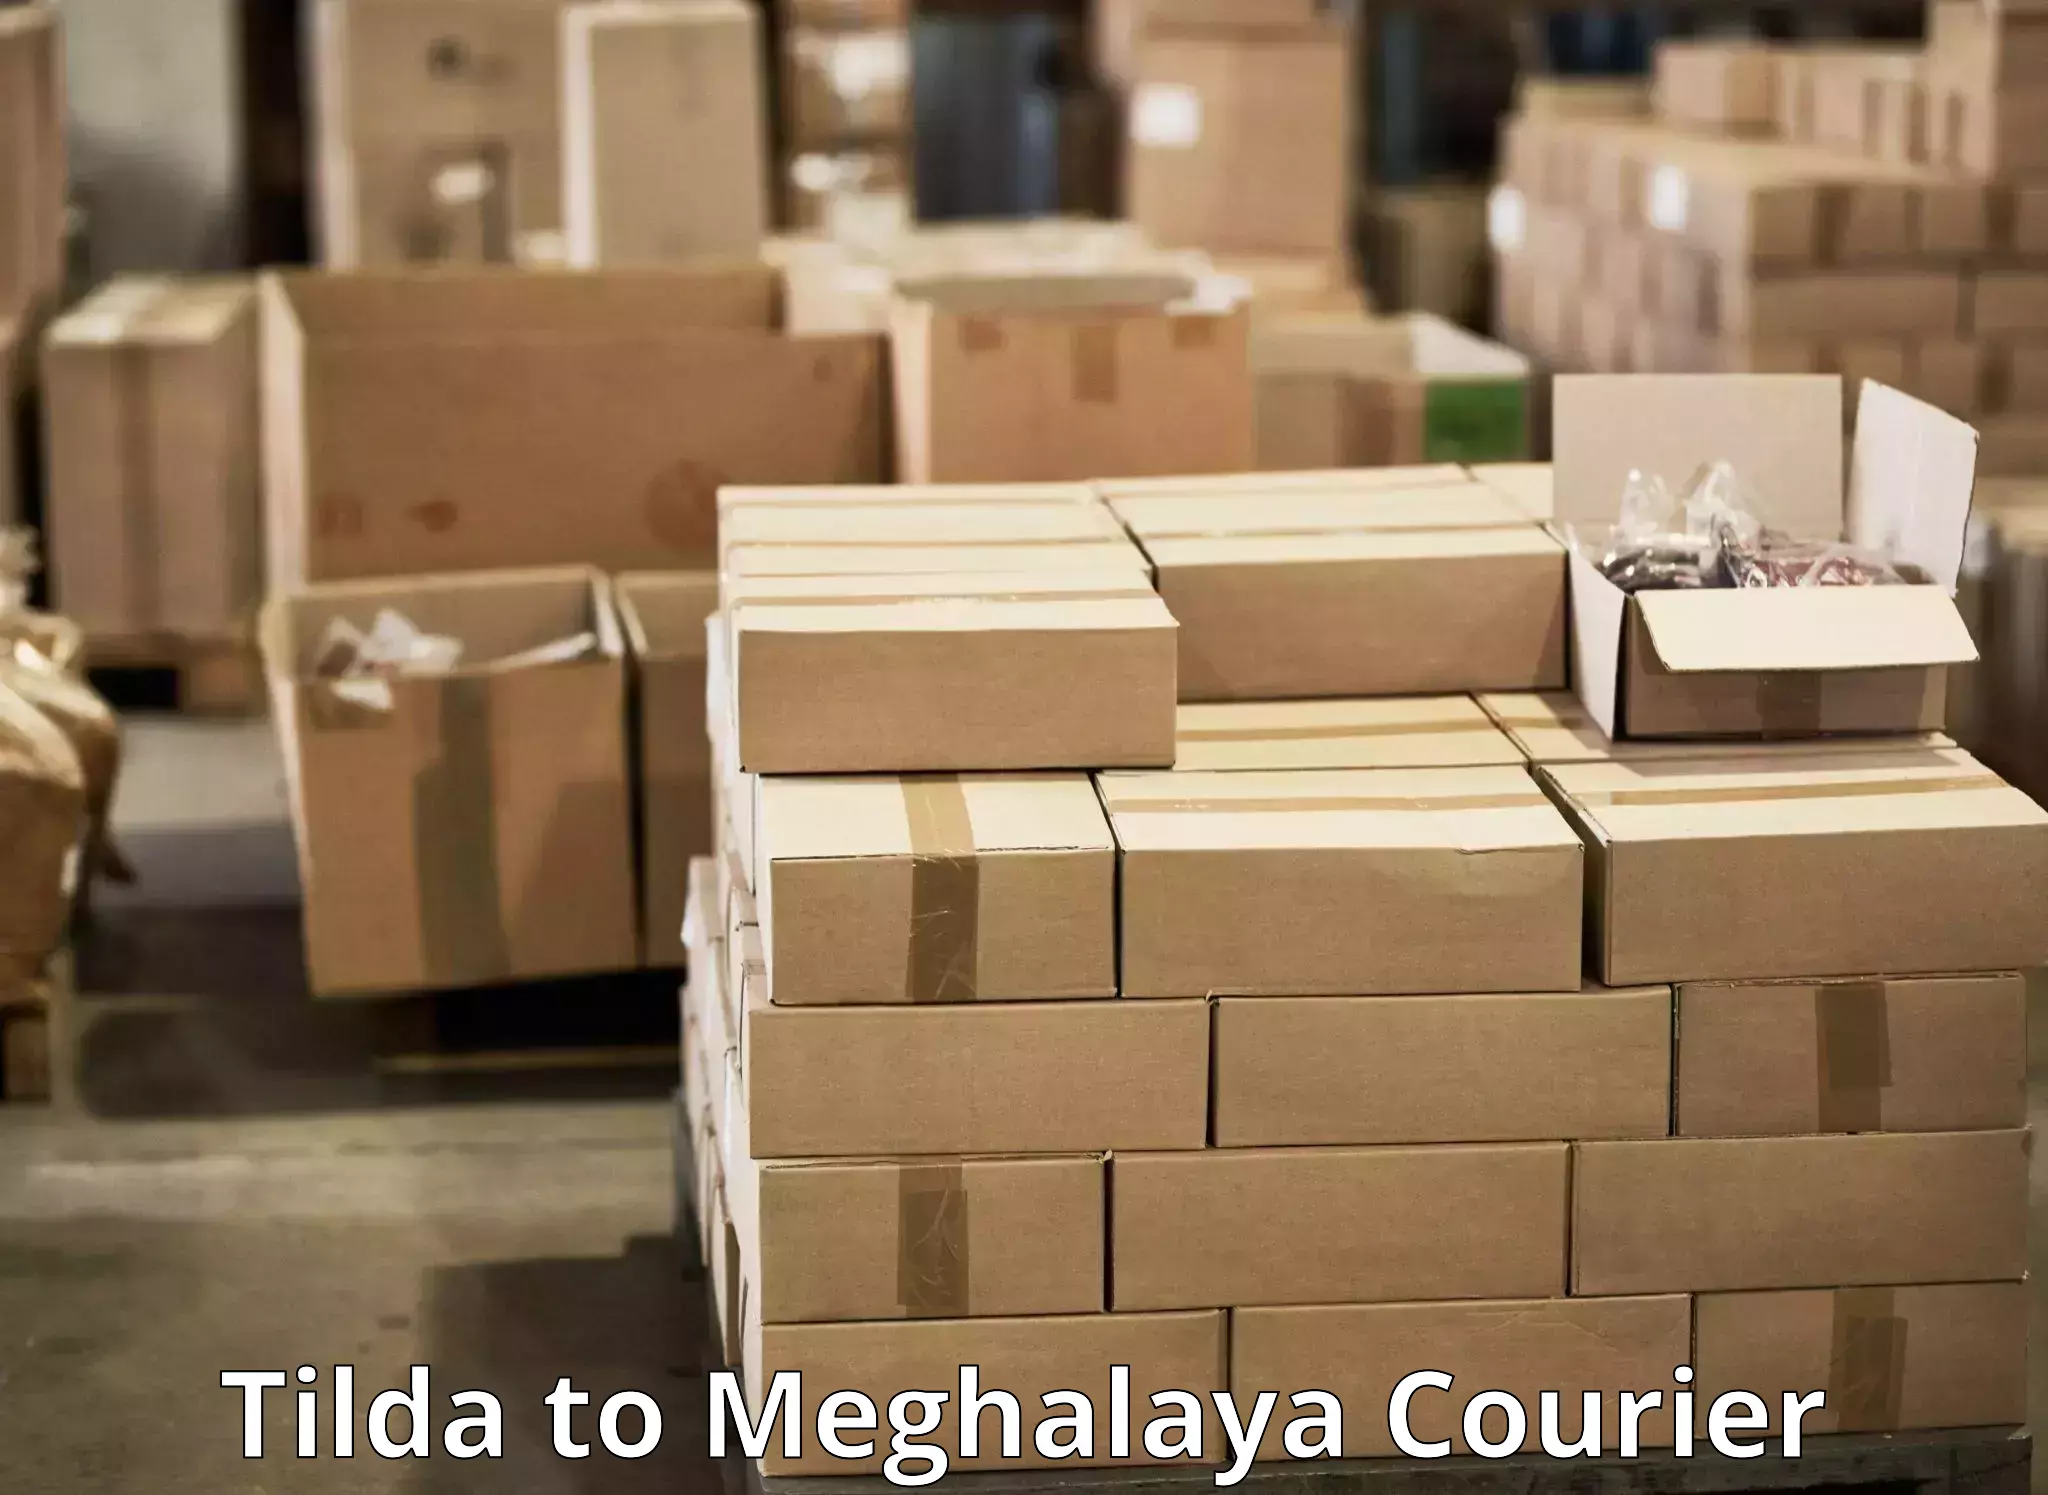 Express postal services Tilda to Meghalaya